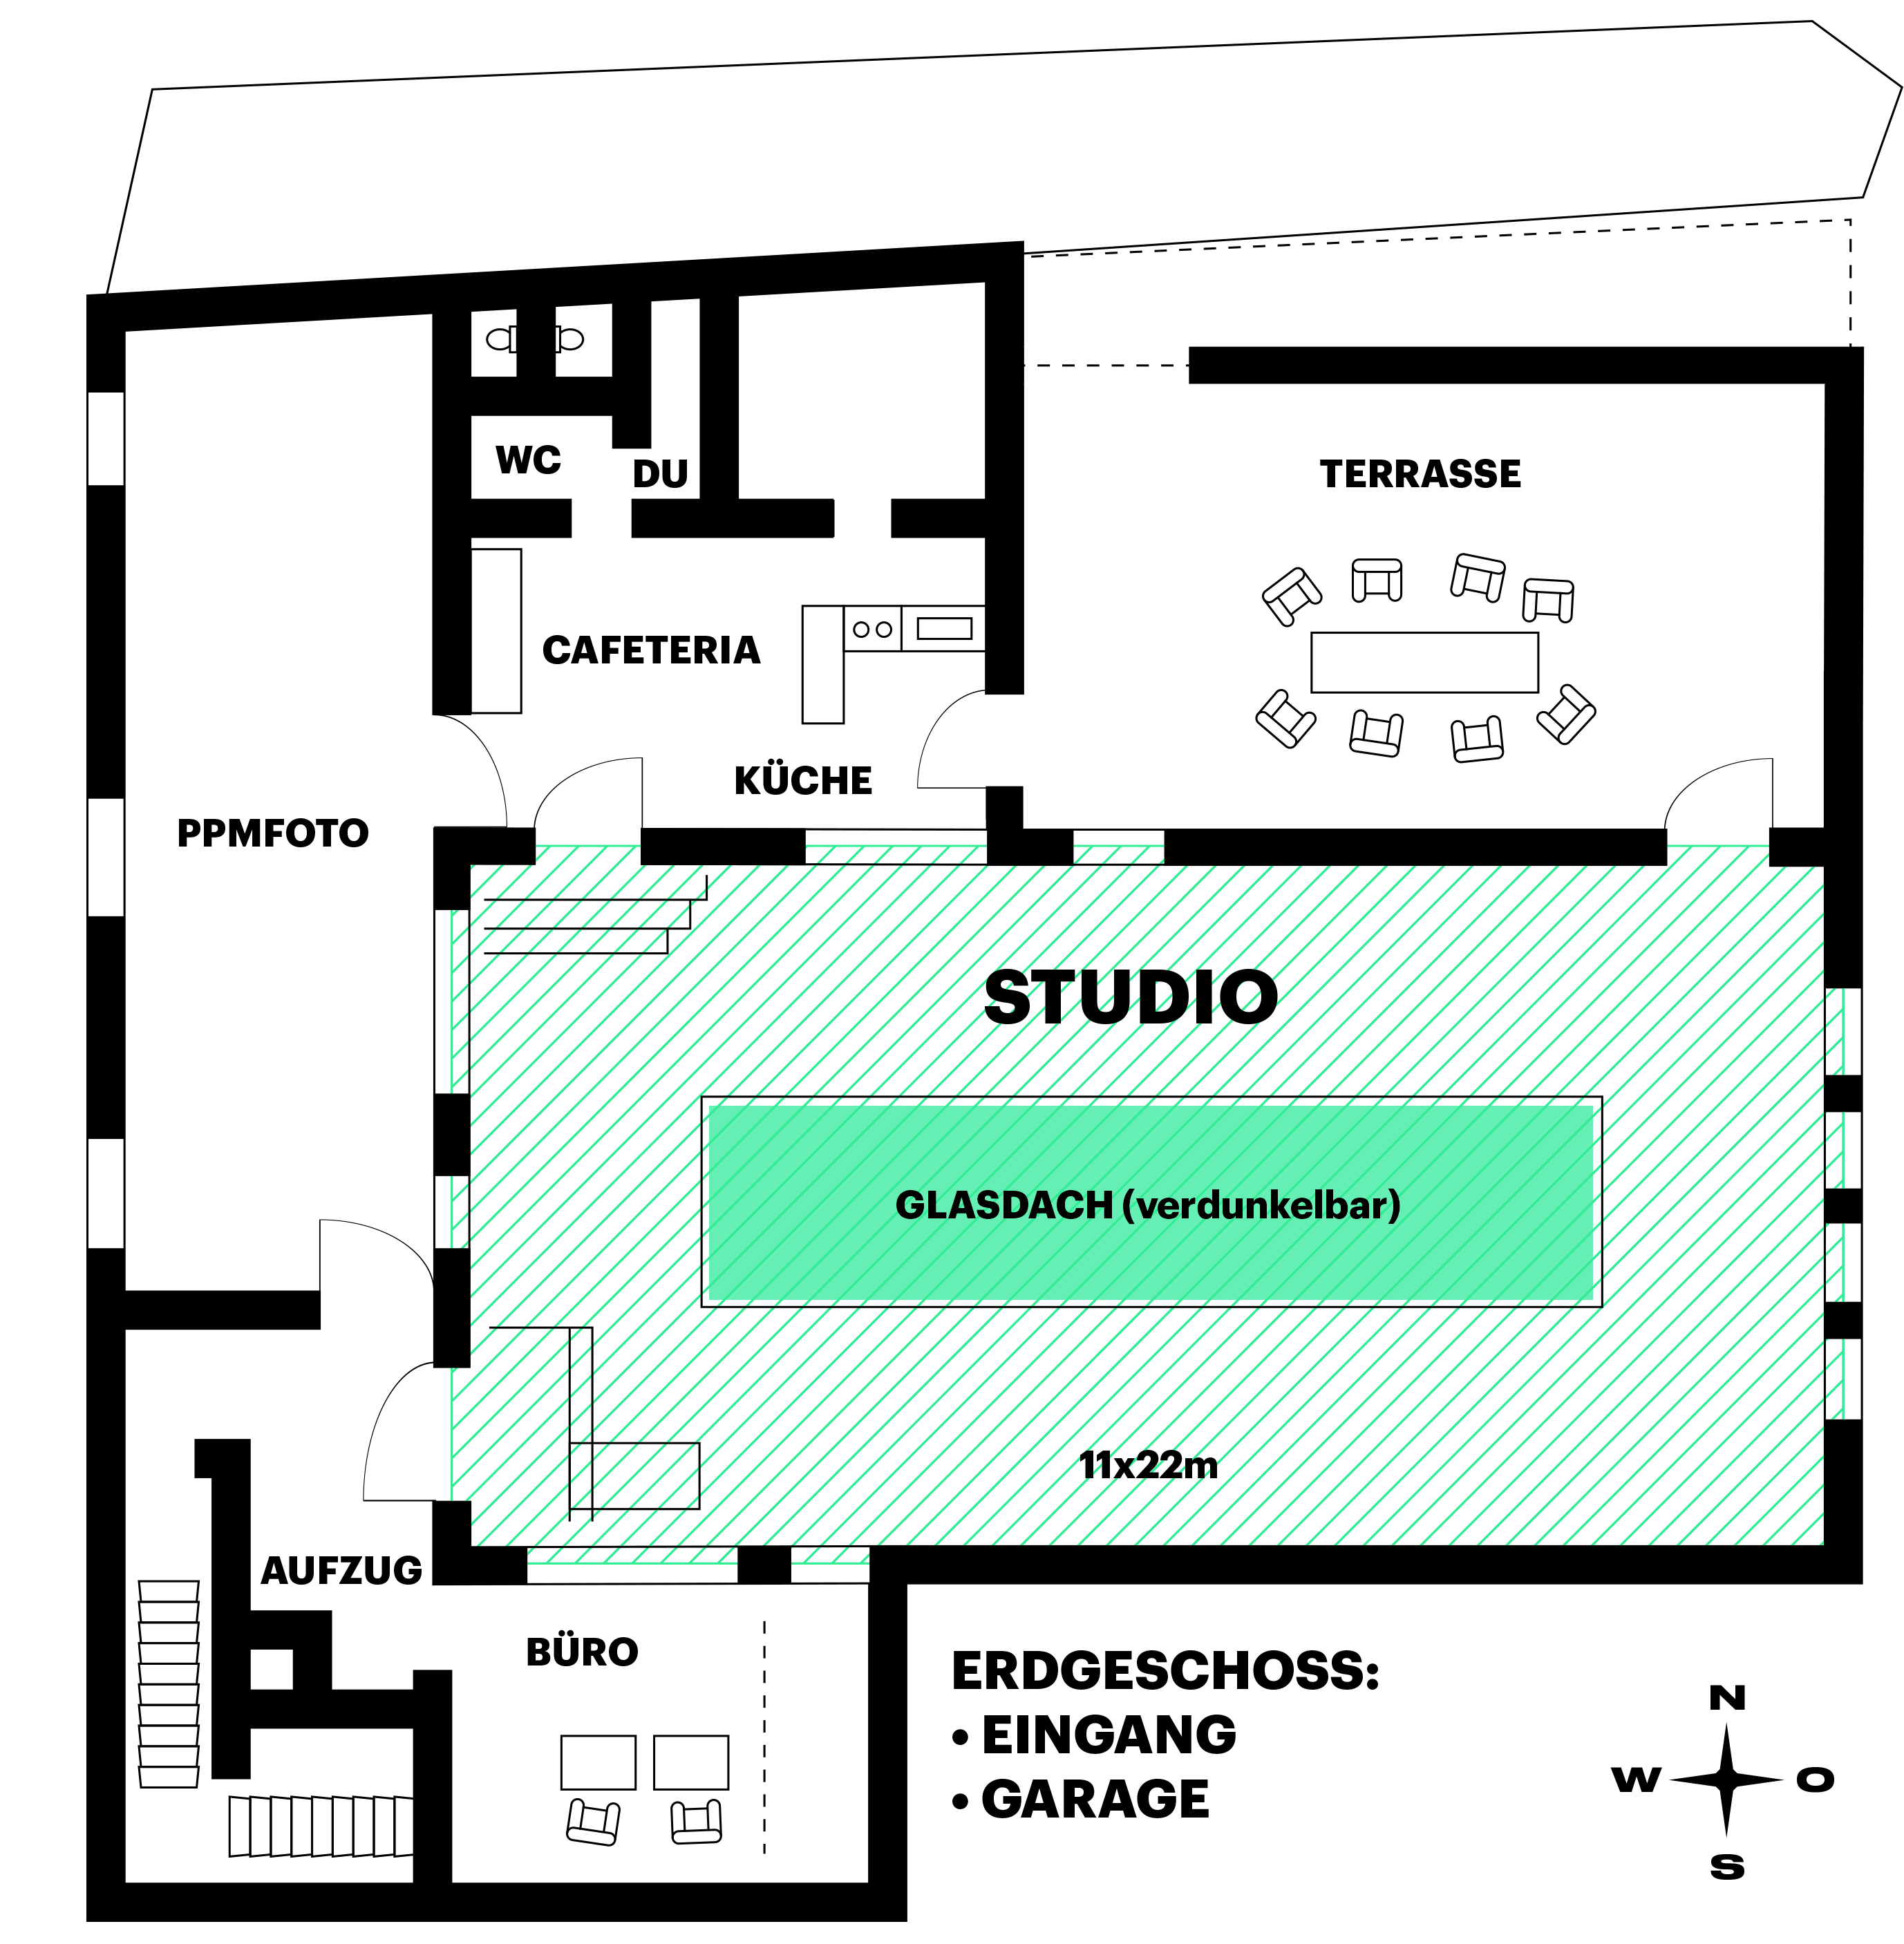 PPMNEXT Studio Plan, Grundriss